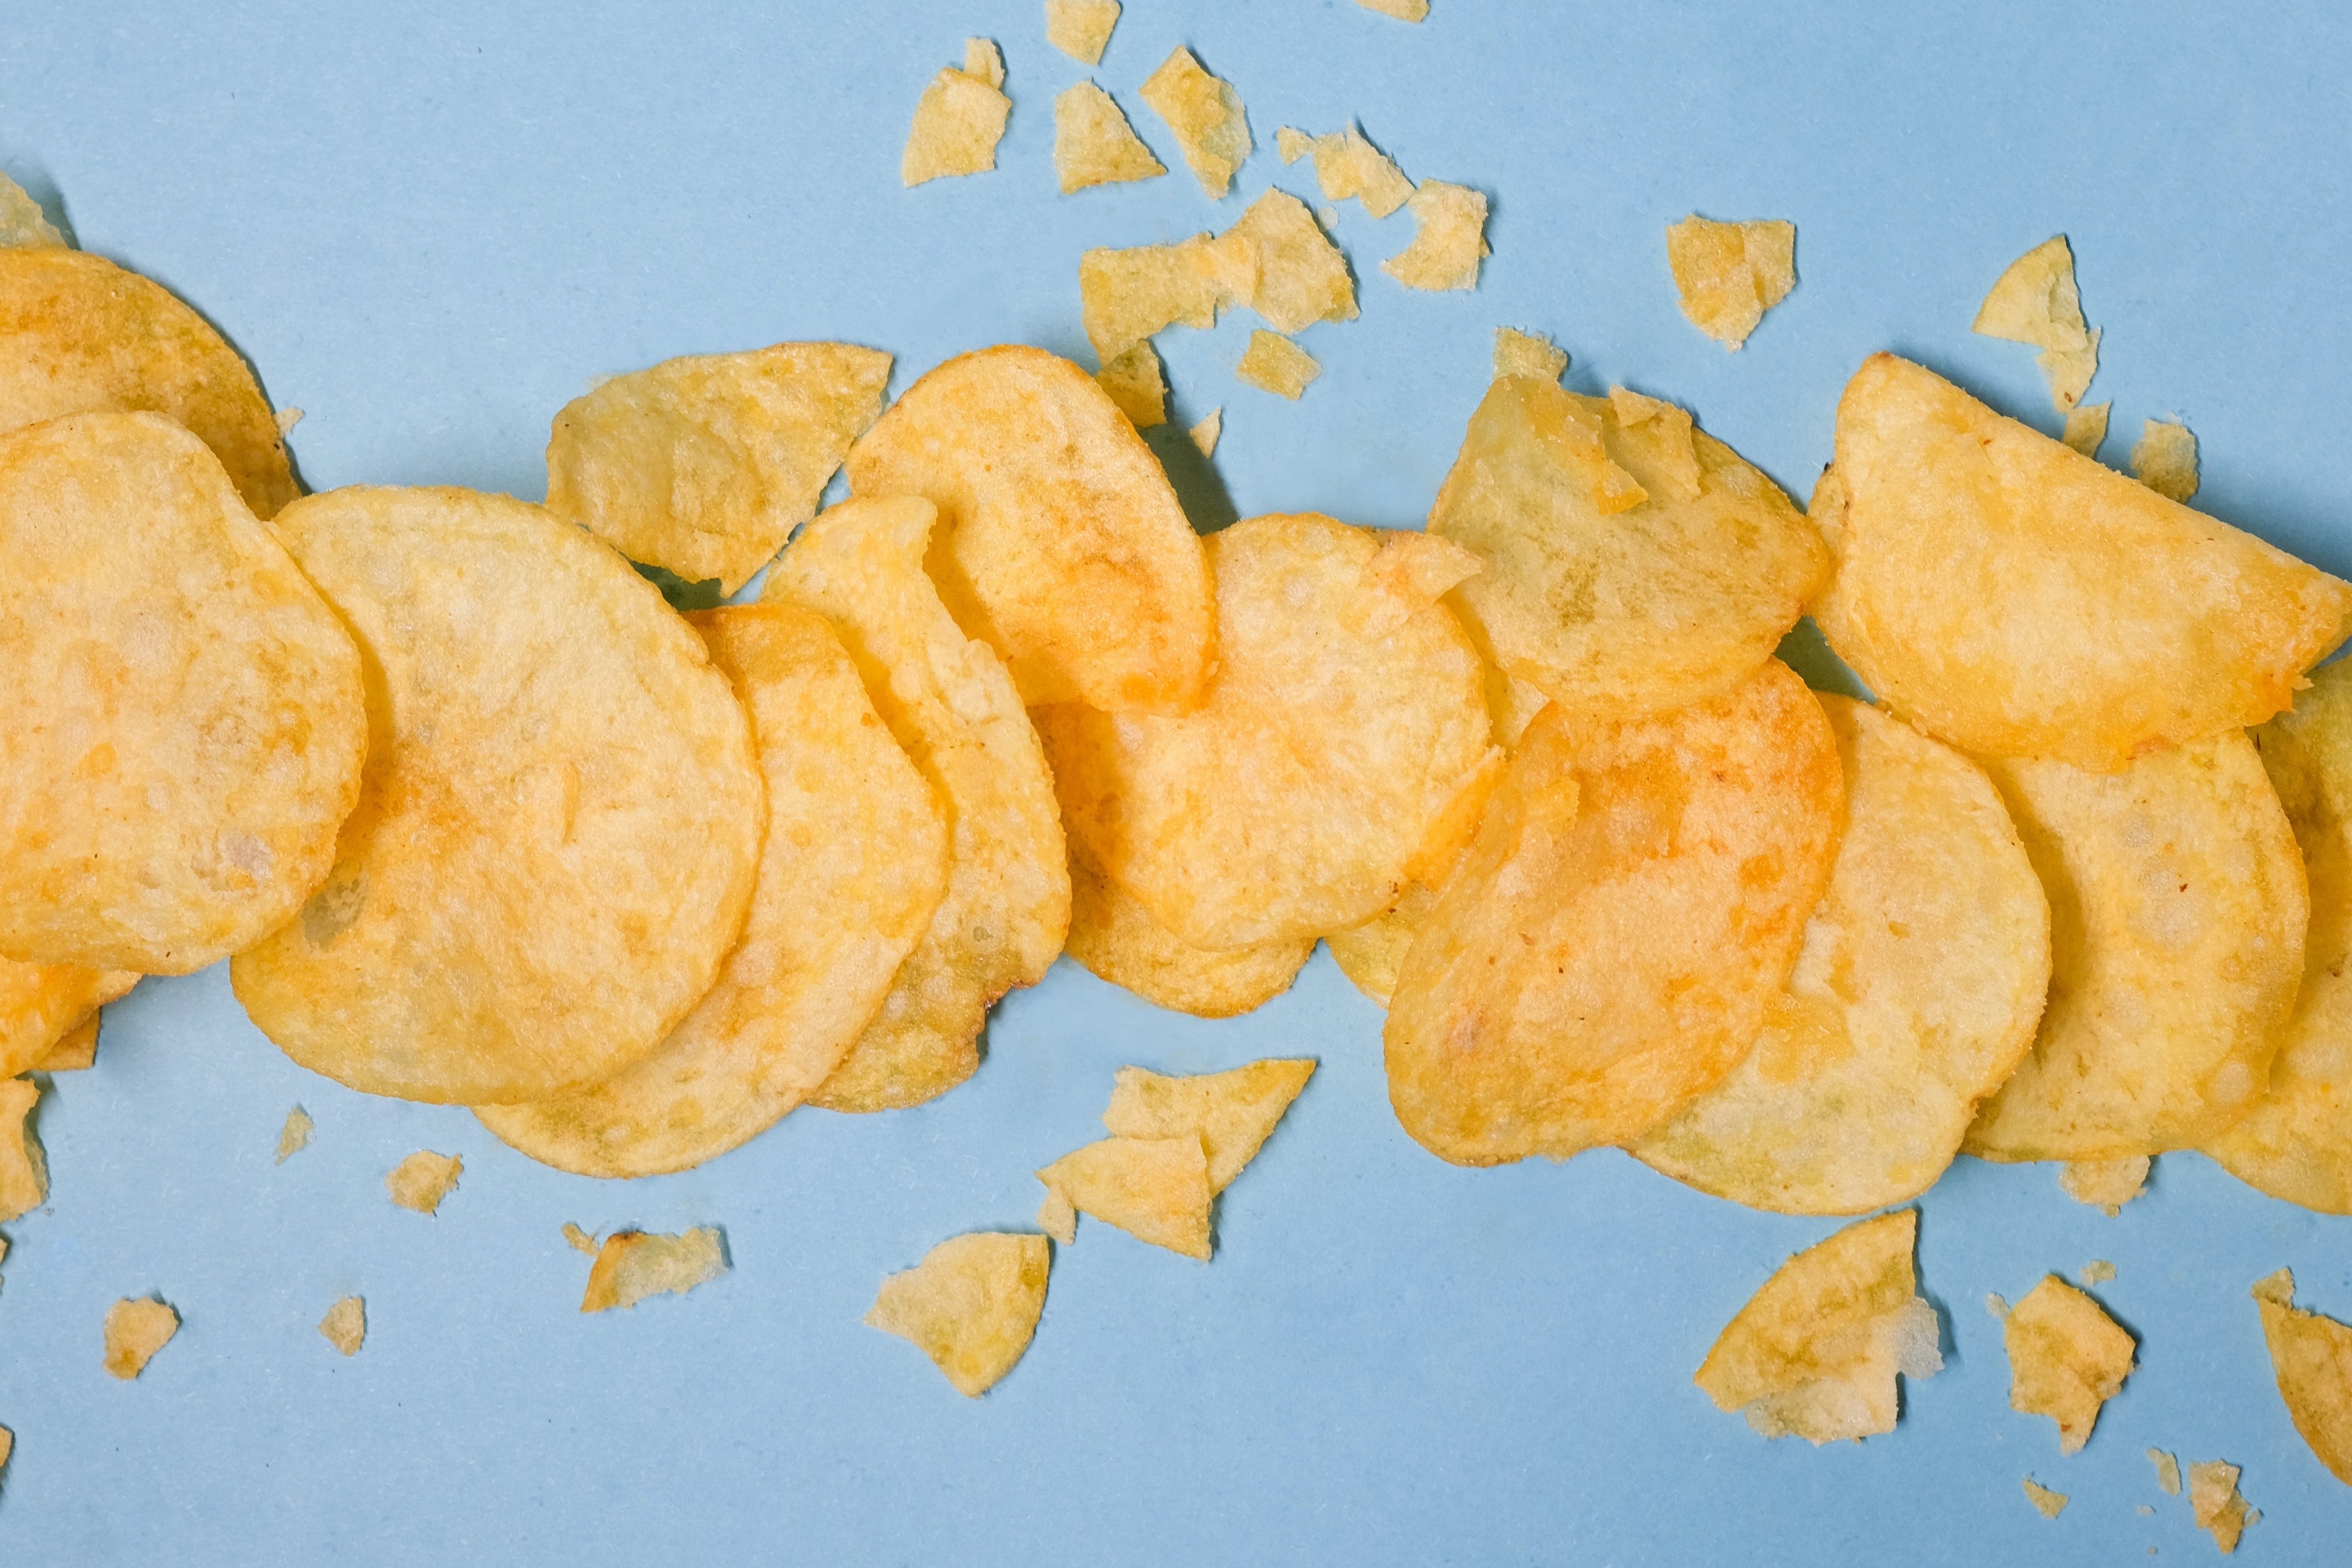 potato chips sprinkled across a blue background